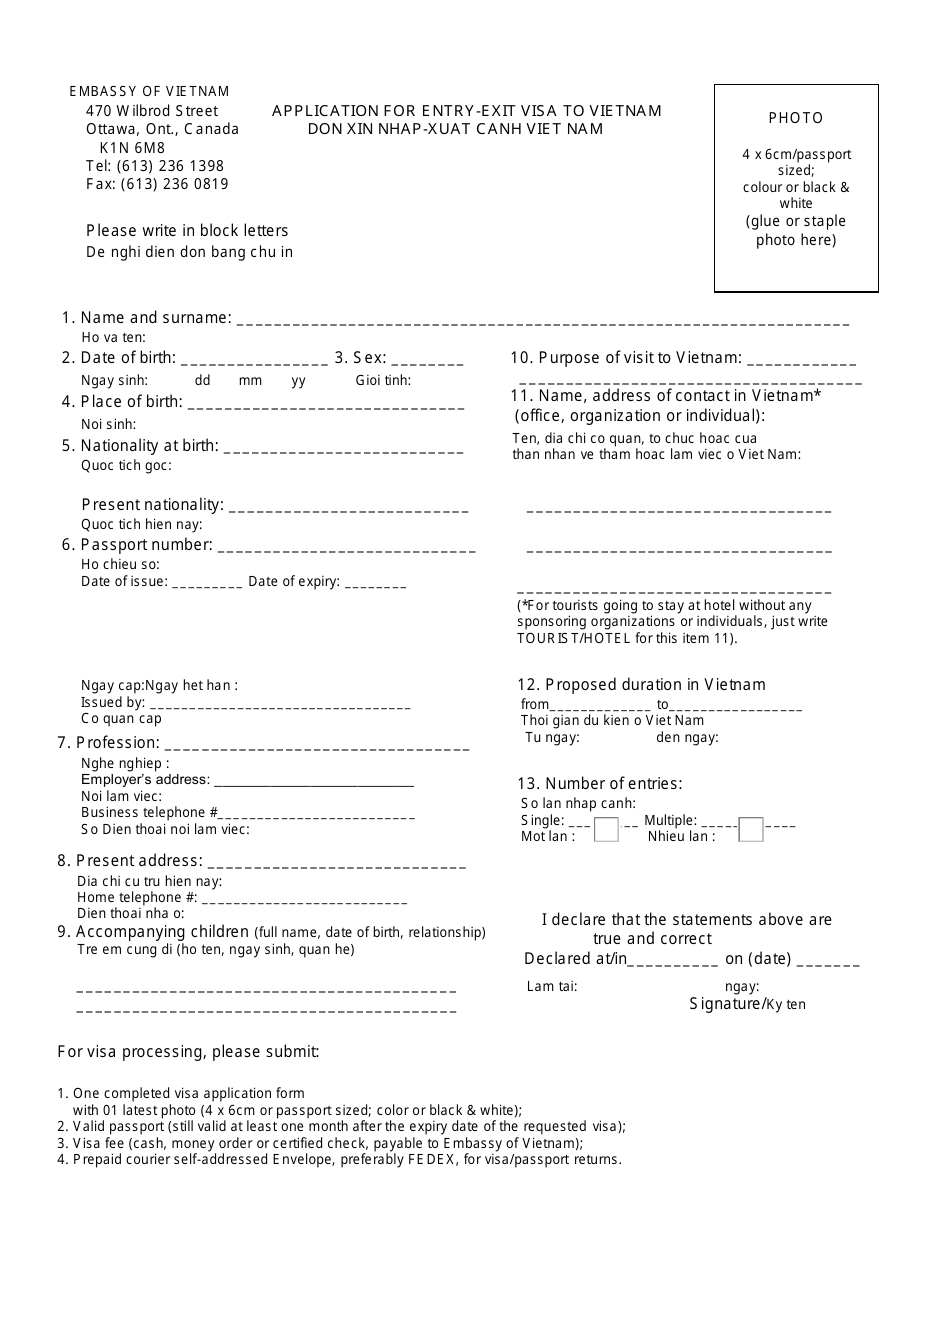 Application for Entry-Exit Visa to Vietnam - Embassy of Vietnam - Ottawa, Ontario, Canada (English / Vietnamese), Page 1